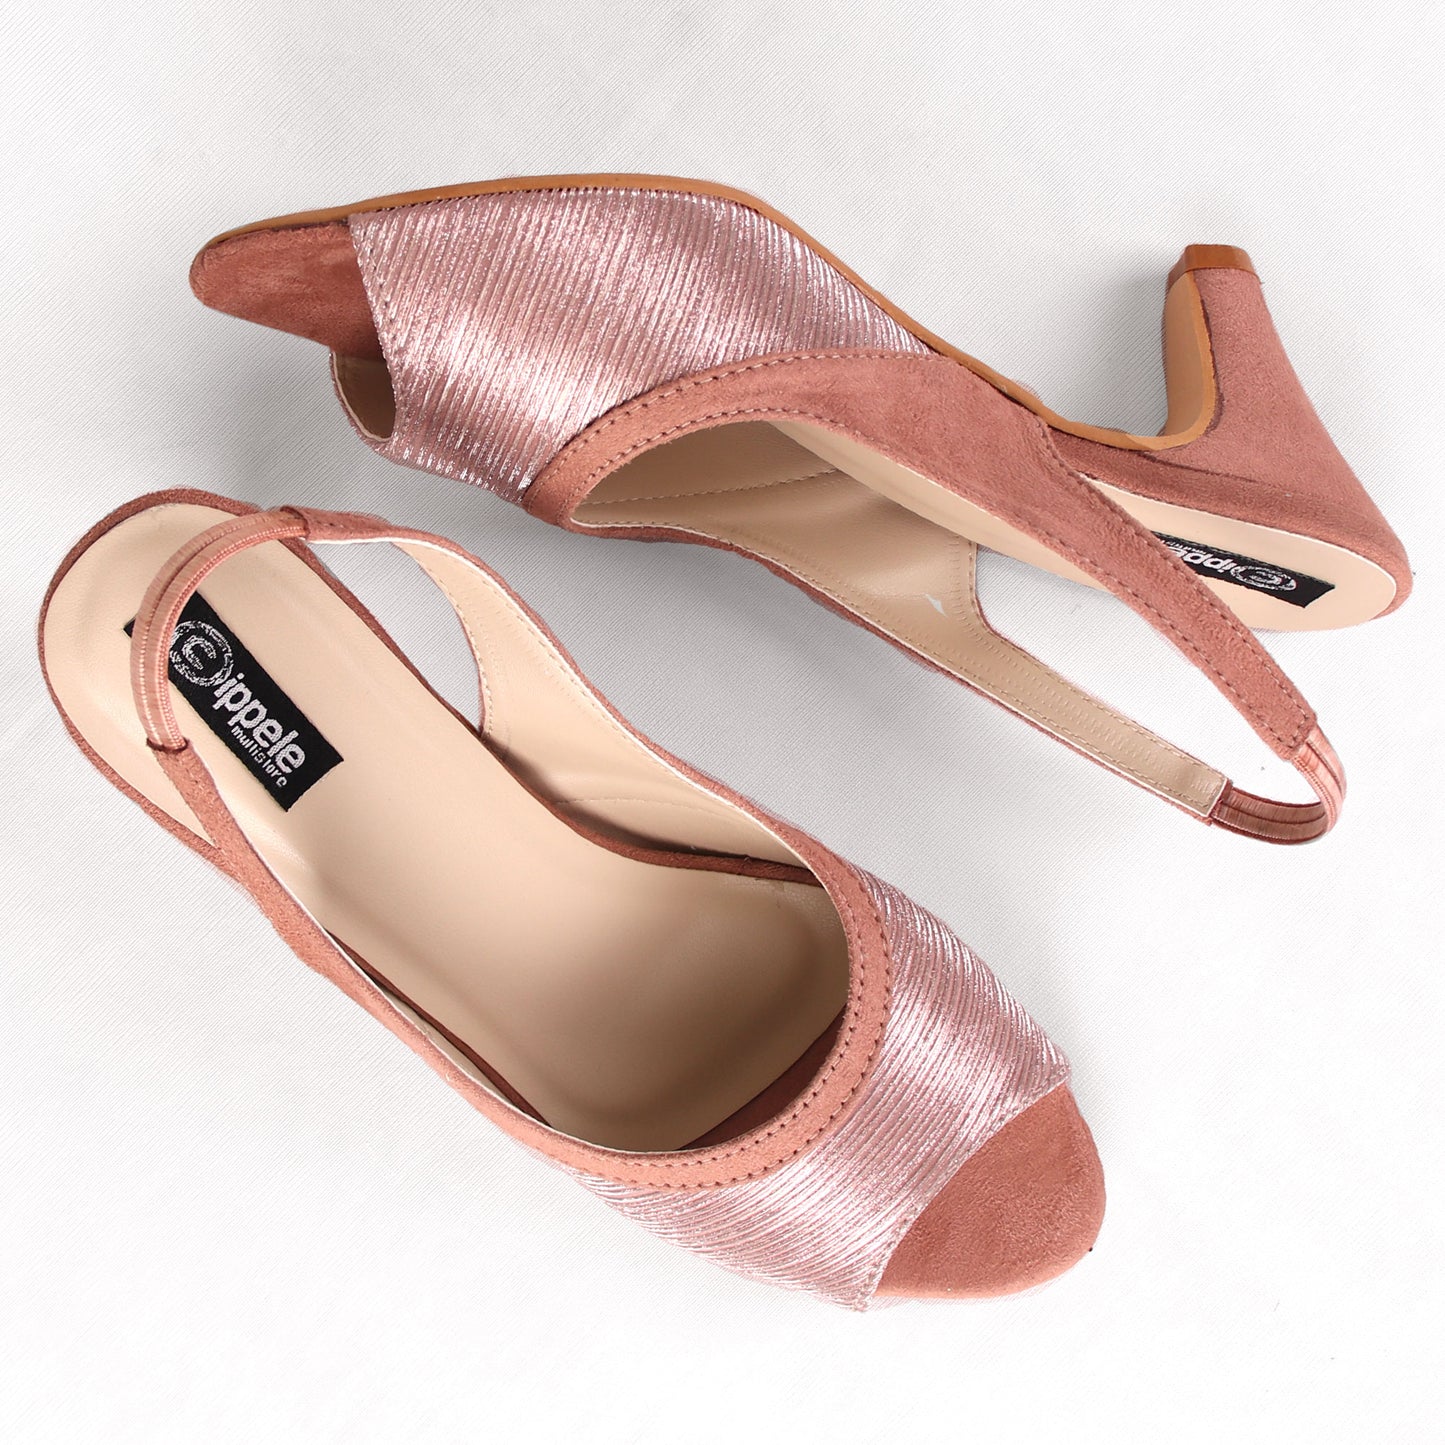 Foot Wear,The Artistic Scrub Heel in Rose Gold Pink - Cippele Multi Store